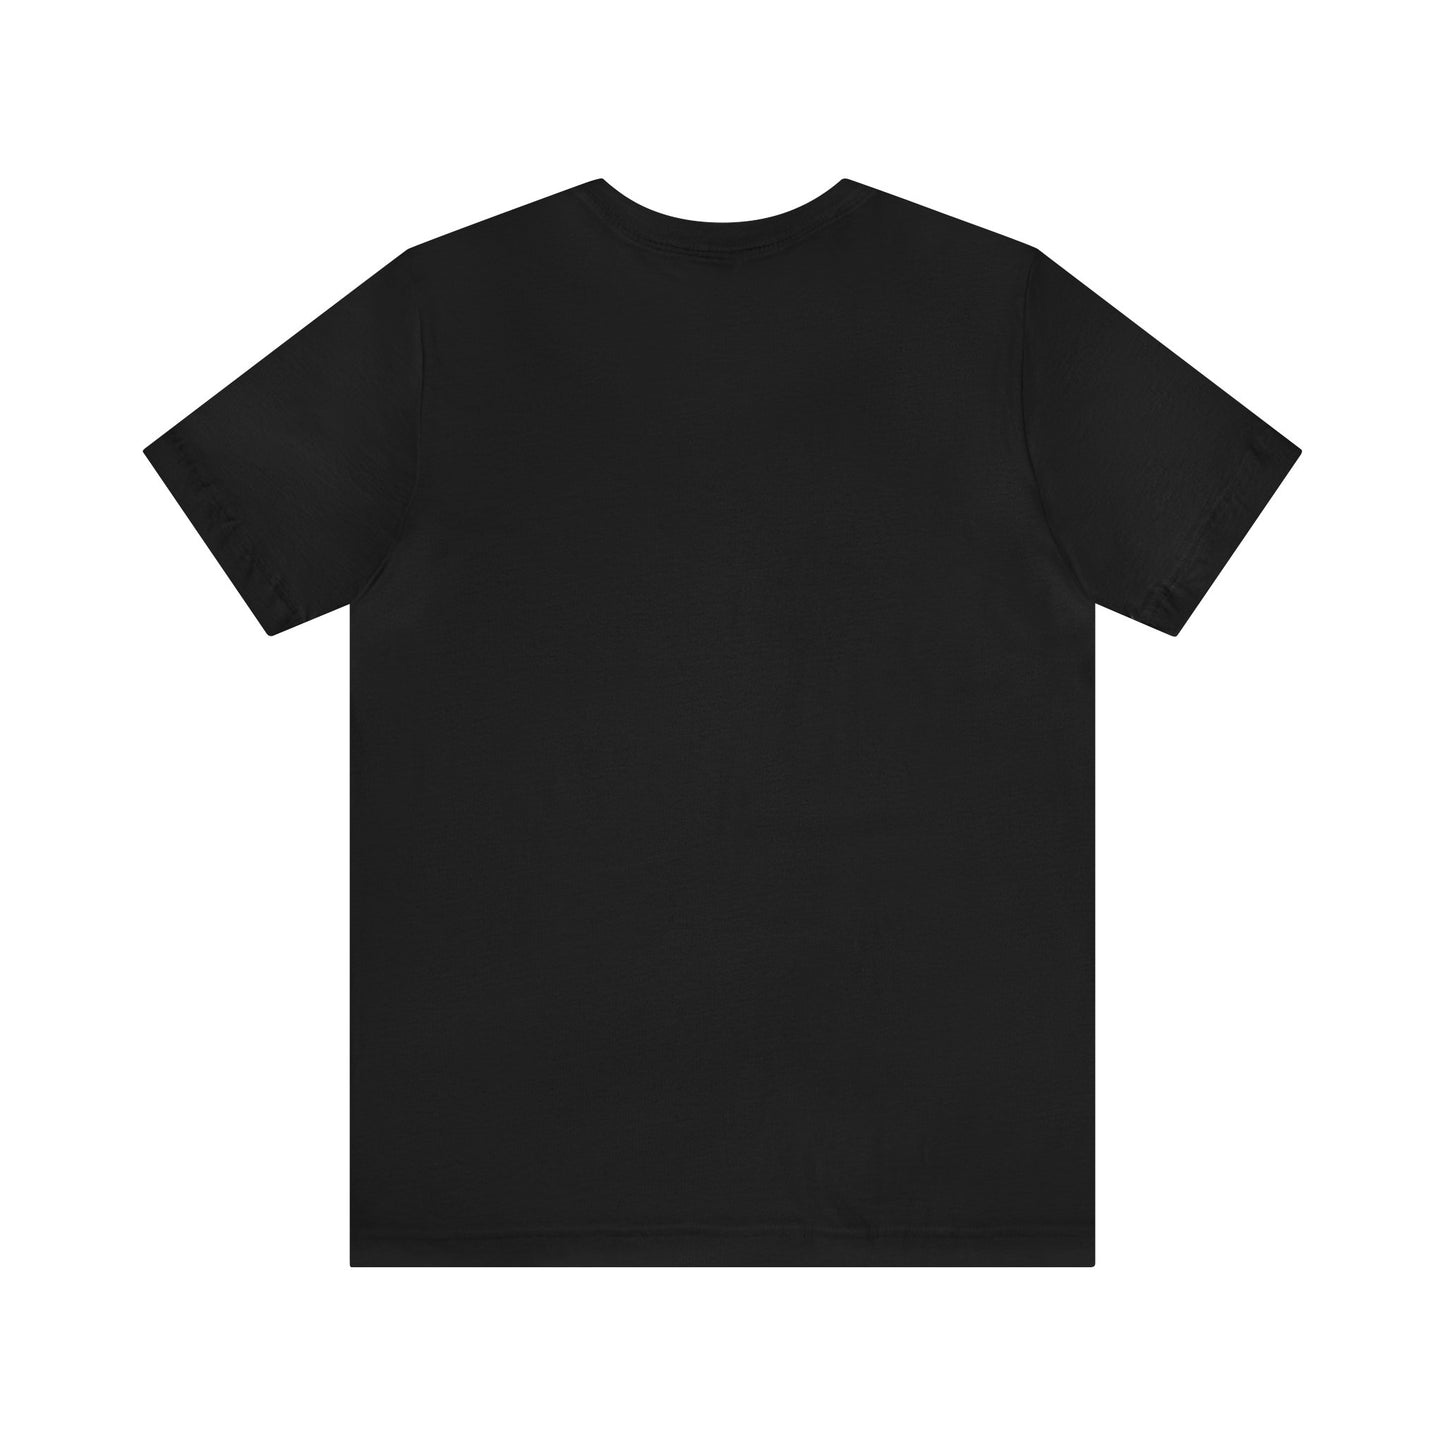 Raccoon on Art Deco Rays, Soft 100% Jersey Cotton T-Shirt, Unisex, Short Sleeve, Retail Fit